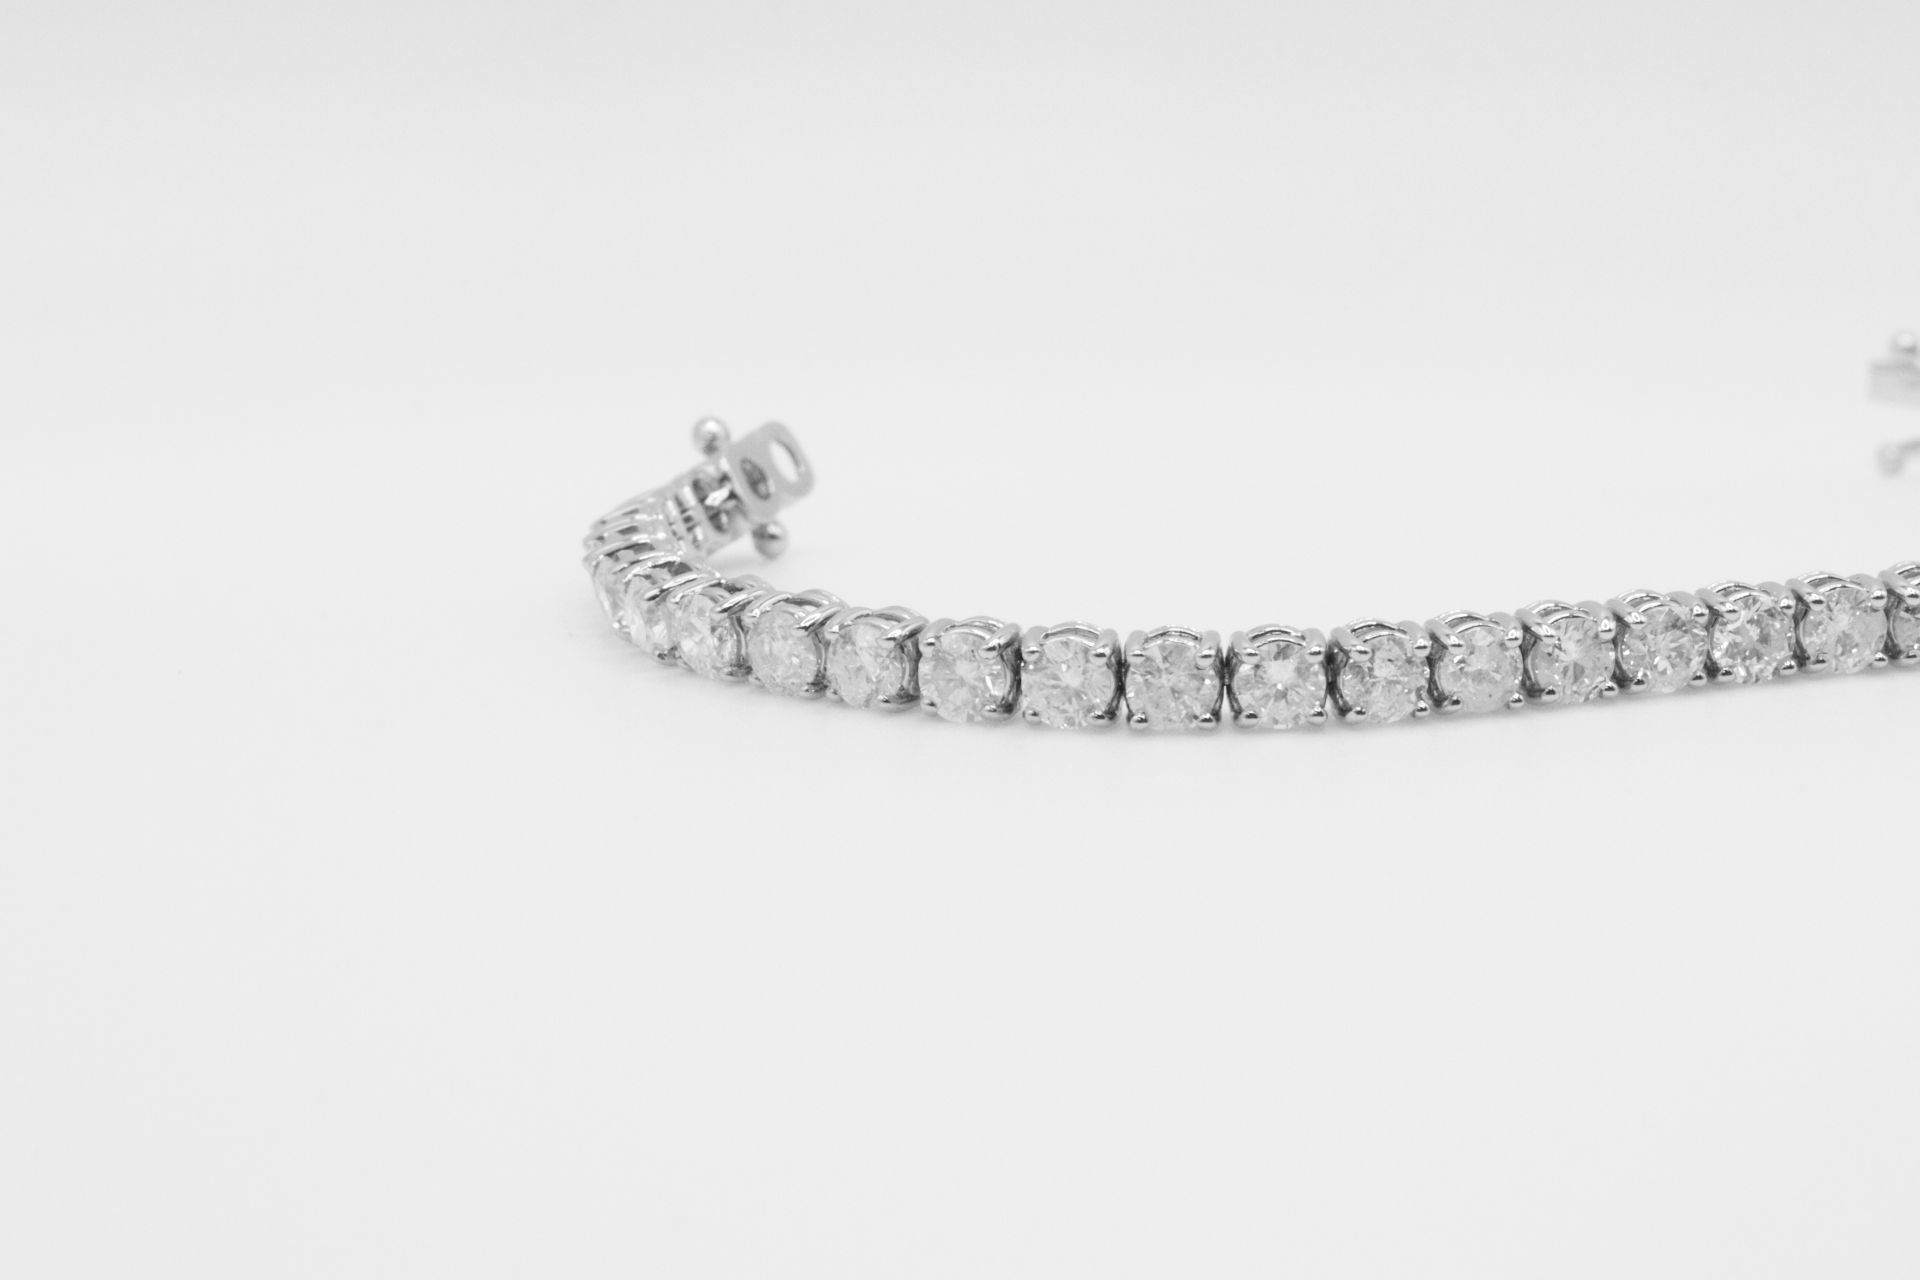 9.0 Carat 18ct White Gold Tennis Bracelet set with Round Brilliant Cut Natural Diamonds - Image 17 of 17